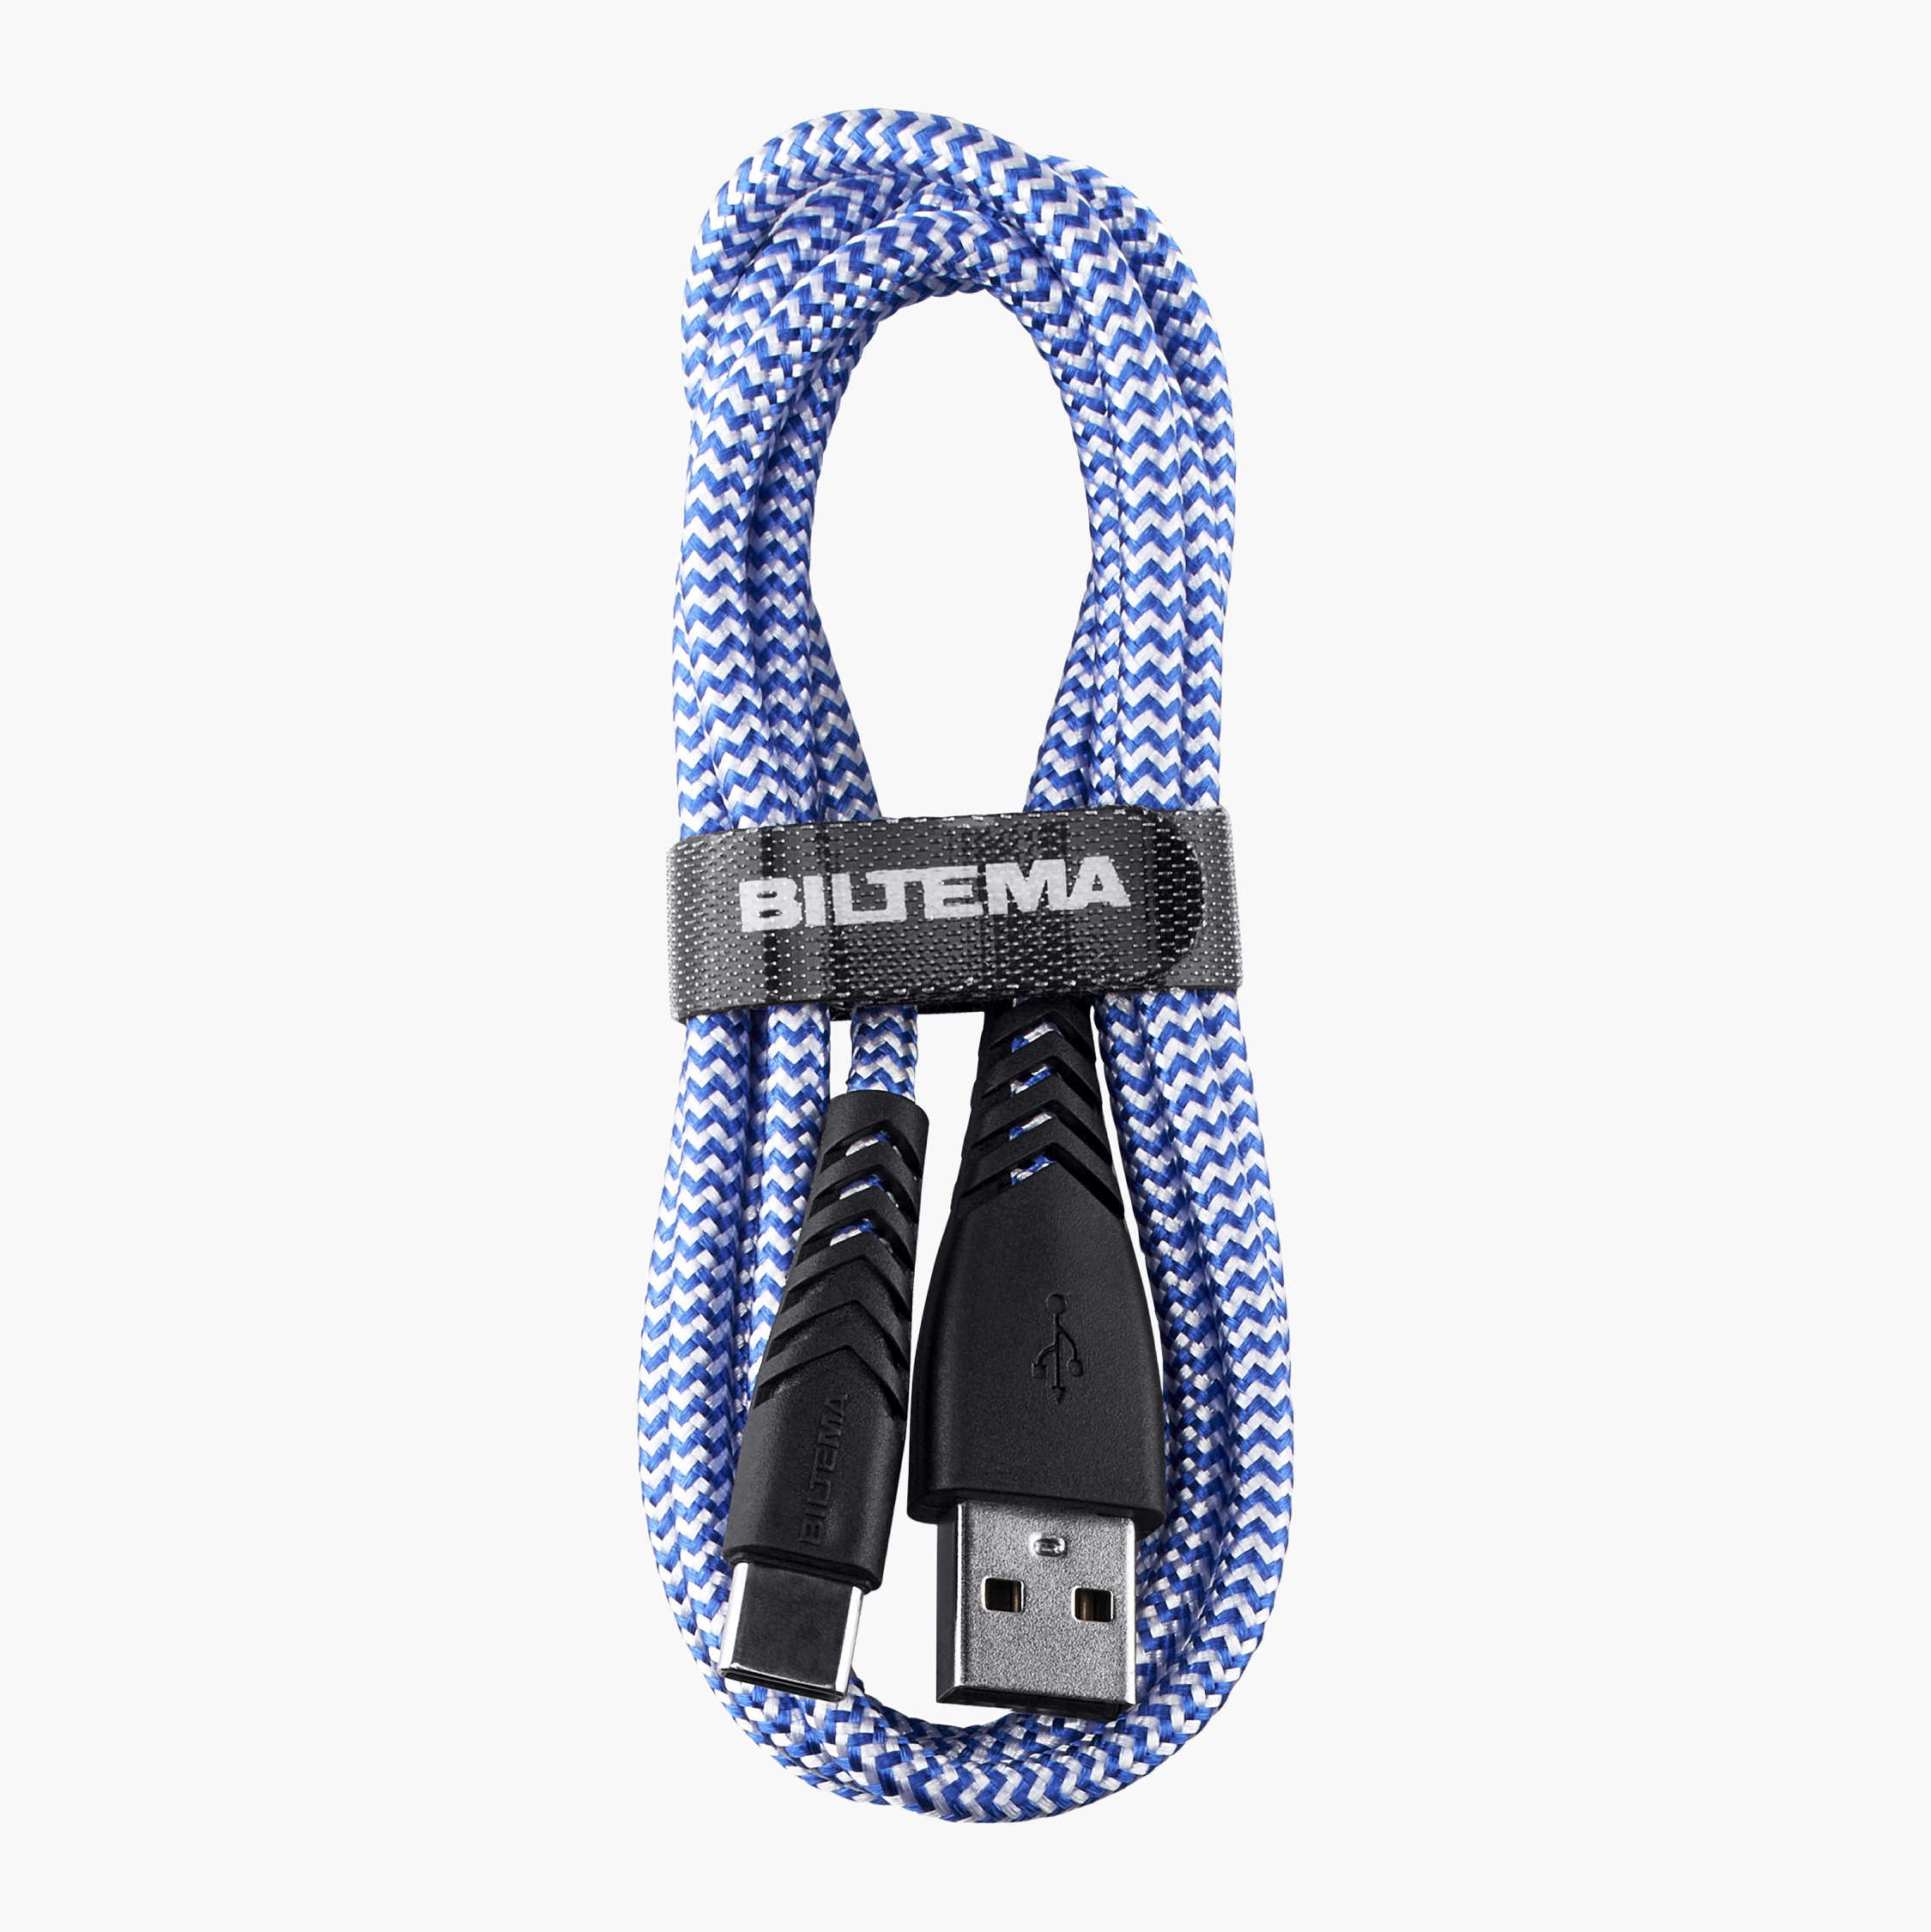 statsminister Dental yderligere USB-ledning med Type C-stik - Biltema.dk